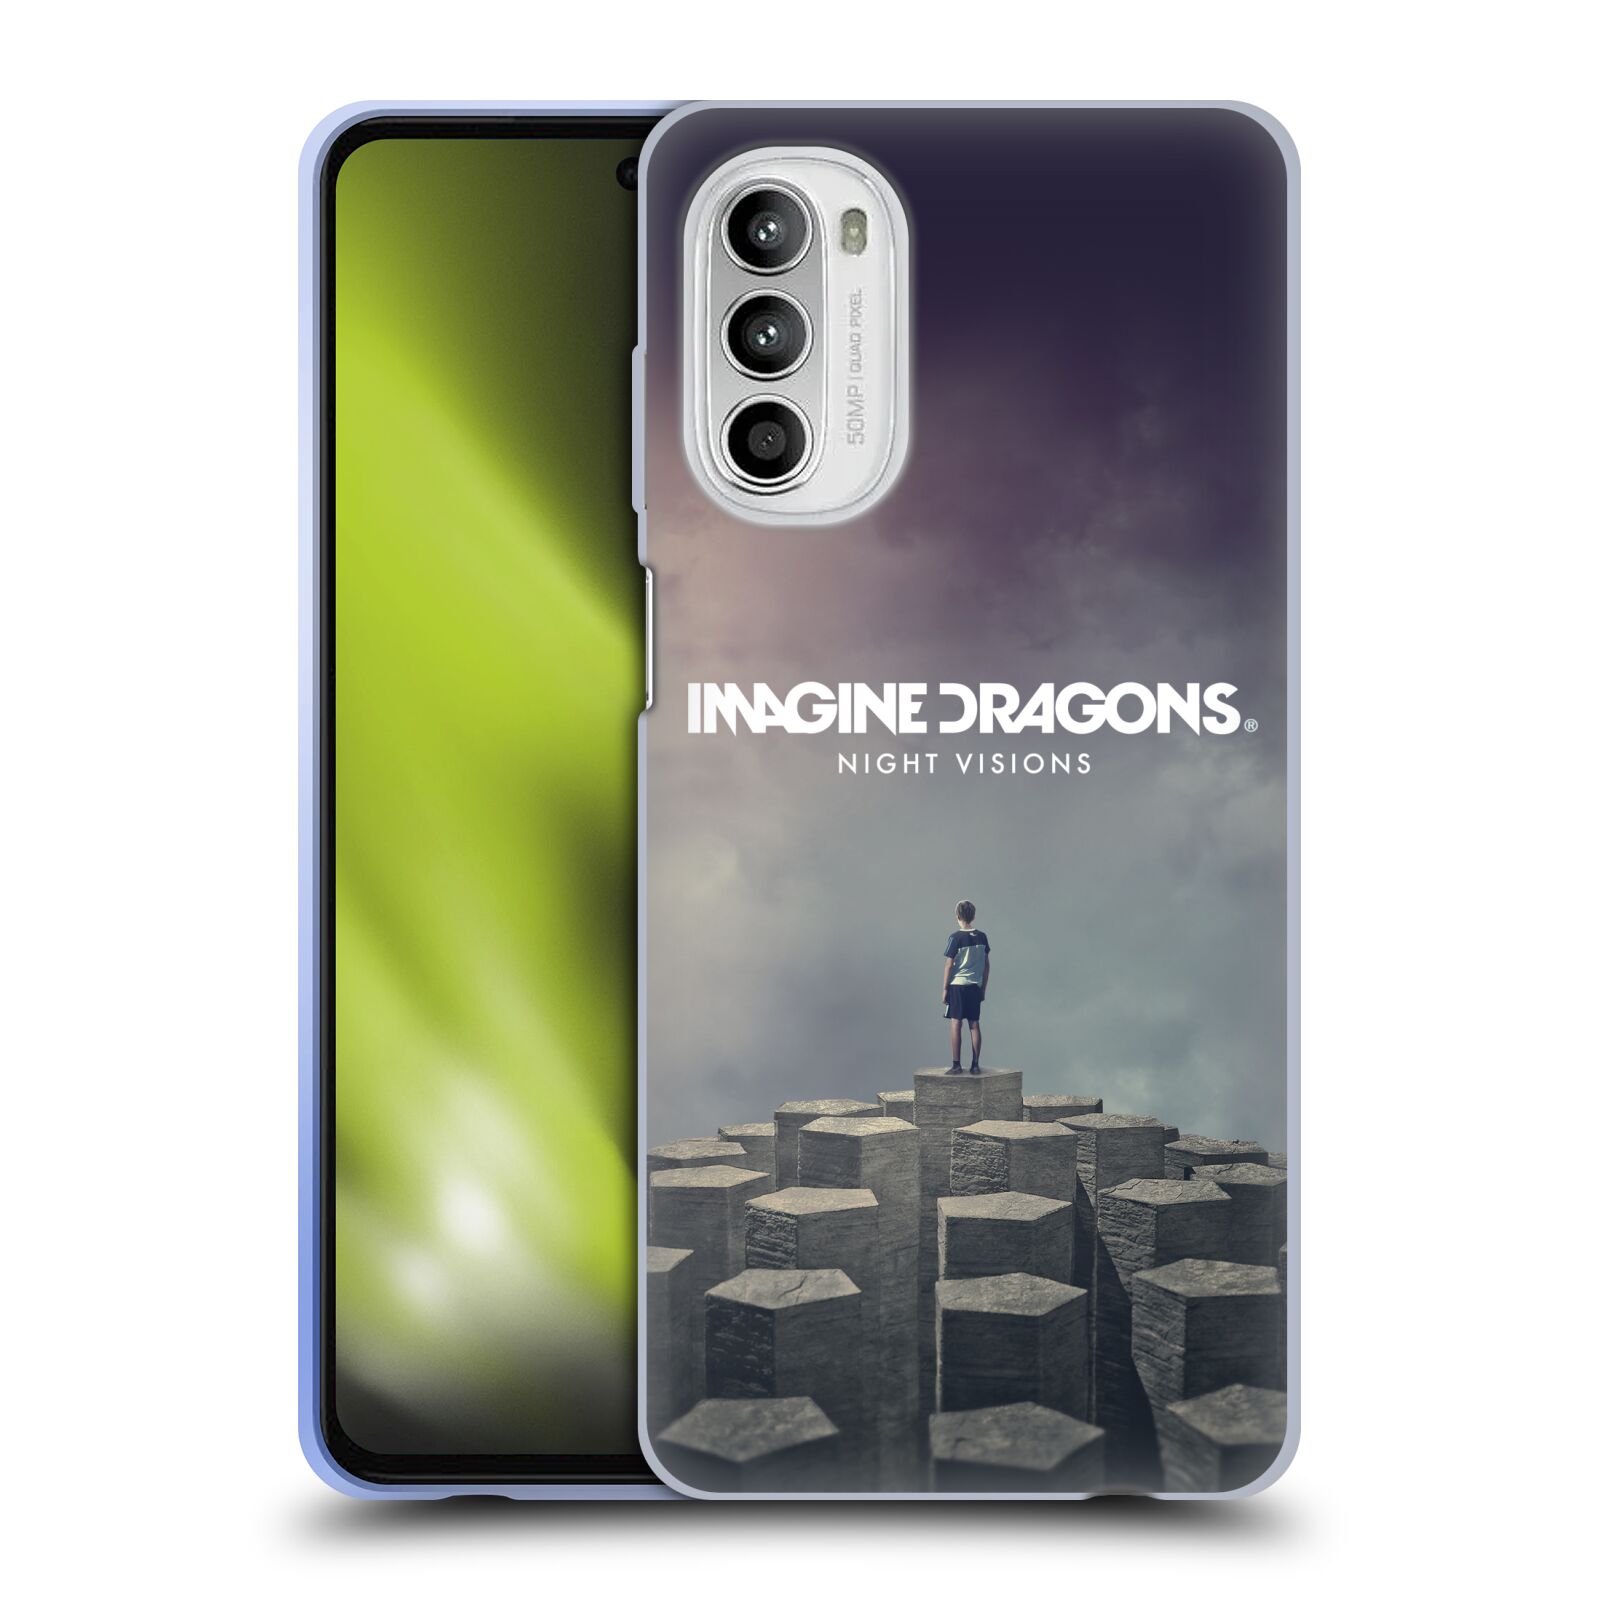 Silikonové pouzdro na mobil Motorola Moto G52 - Imagine Dragons - Night Visions